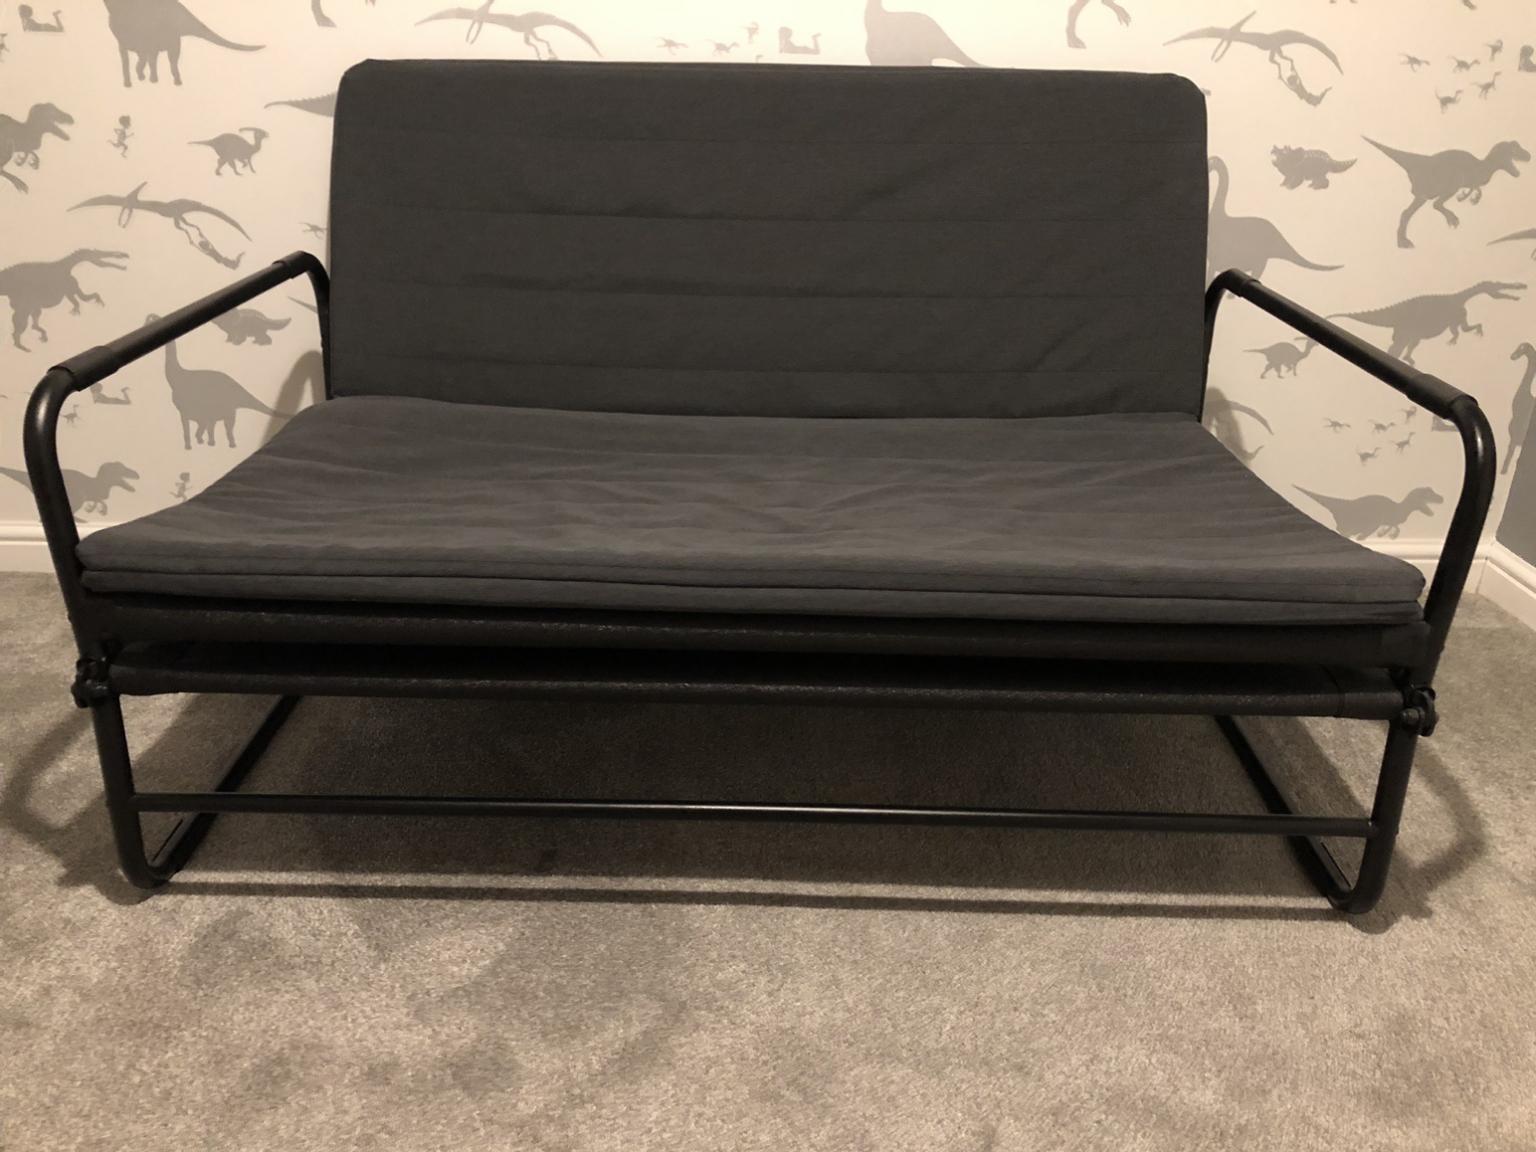 metal sofa bed amazon